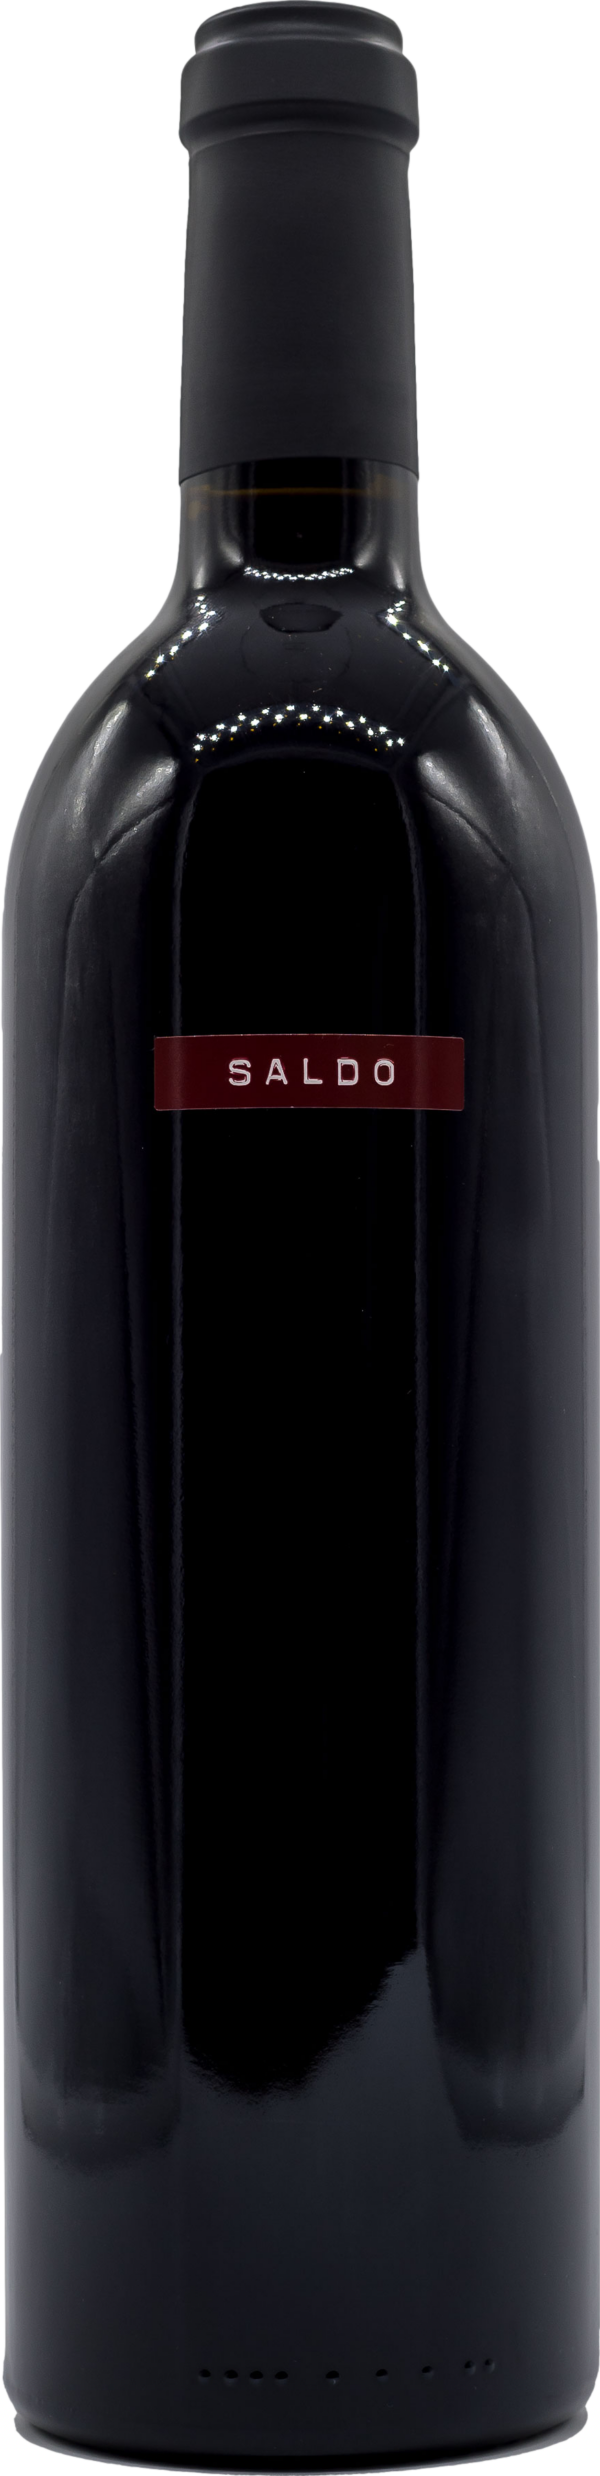 Product image of The Prisoner Wine Company Zinfandel Saldo from 8wines